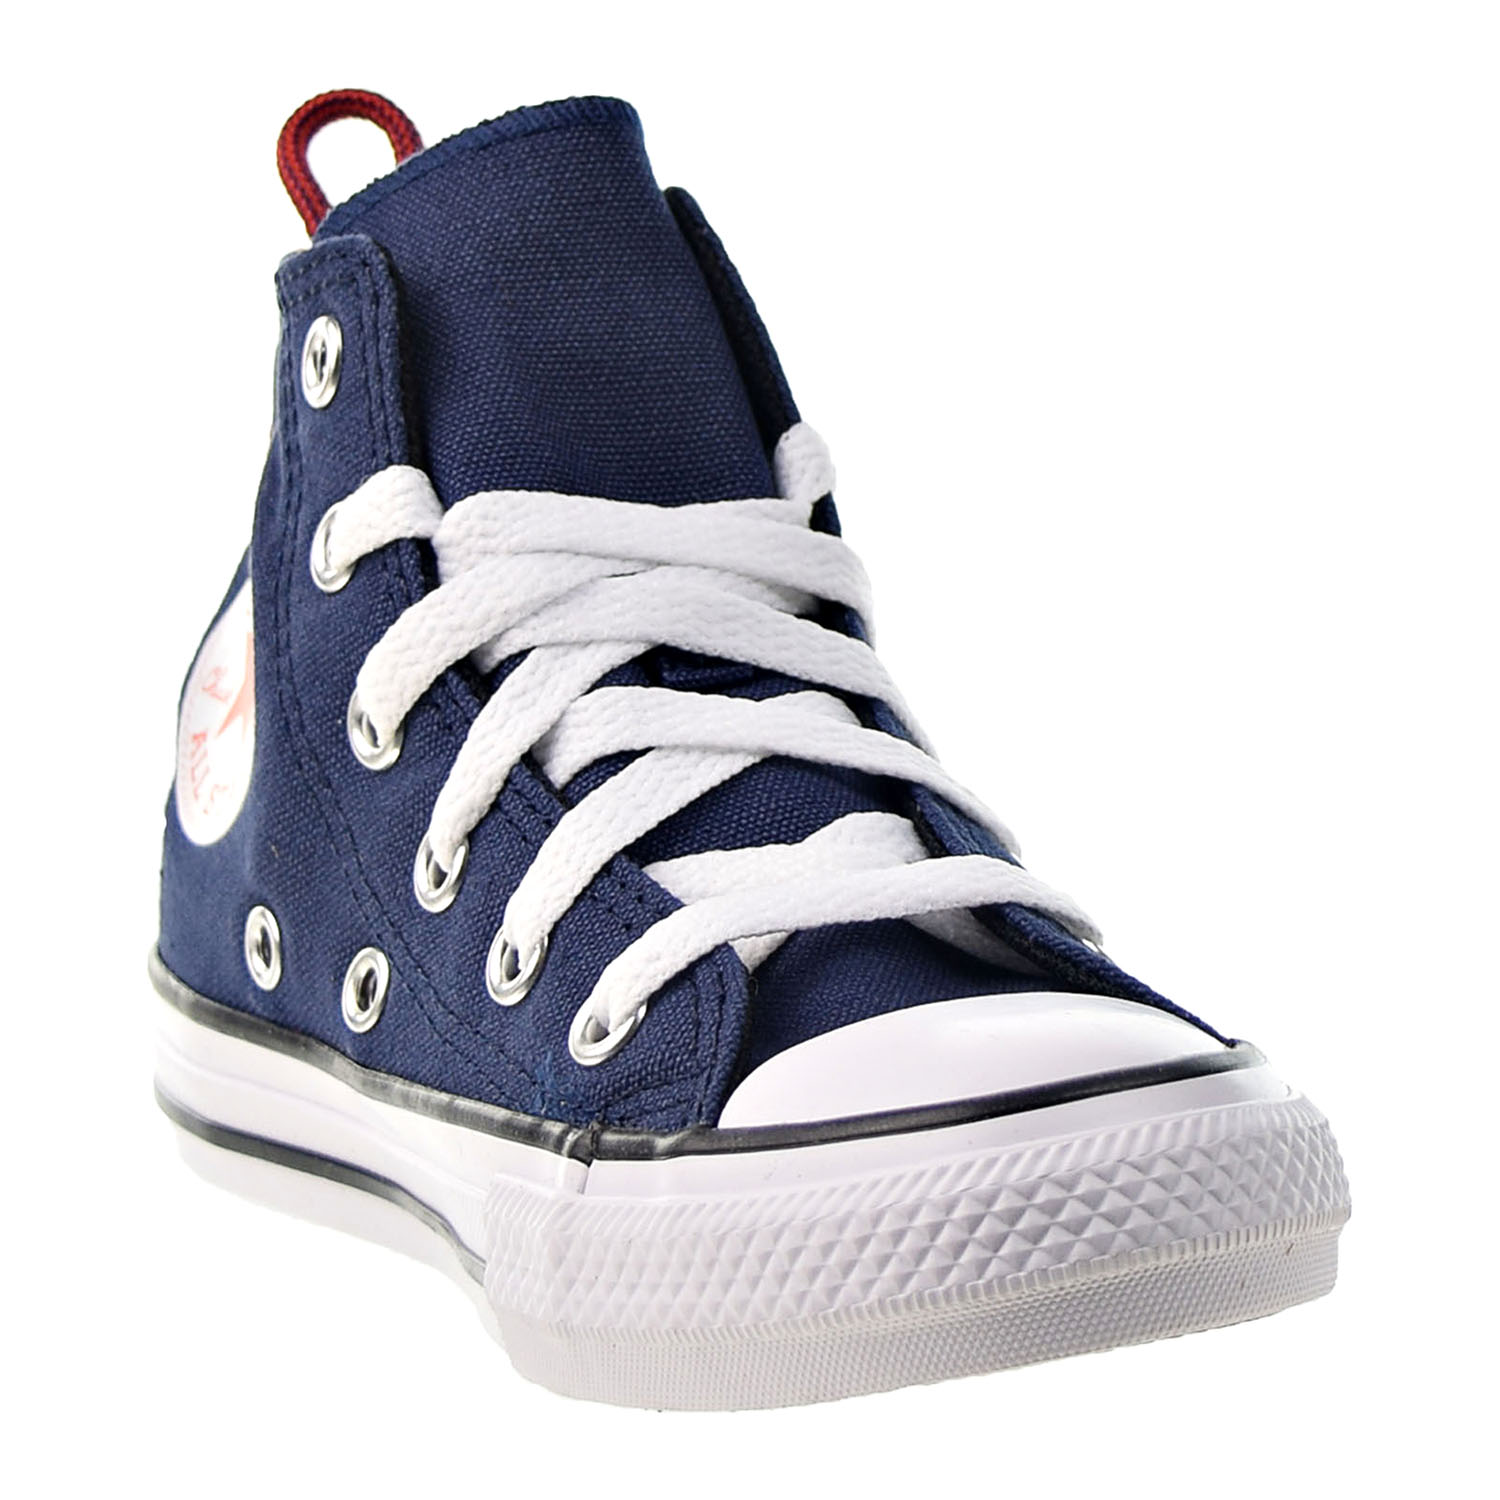 Converse Chuck Taylor All Star Hi Kids' Shoes Midnight Navy-Bright Orange 670671f - image 2 of 6